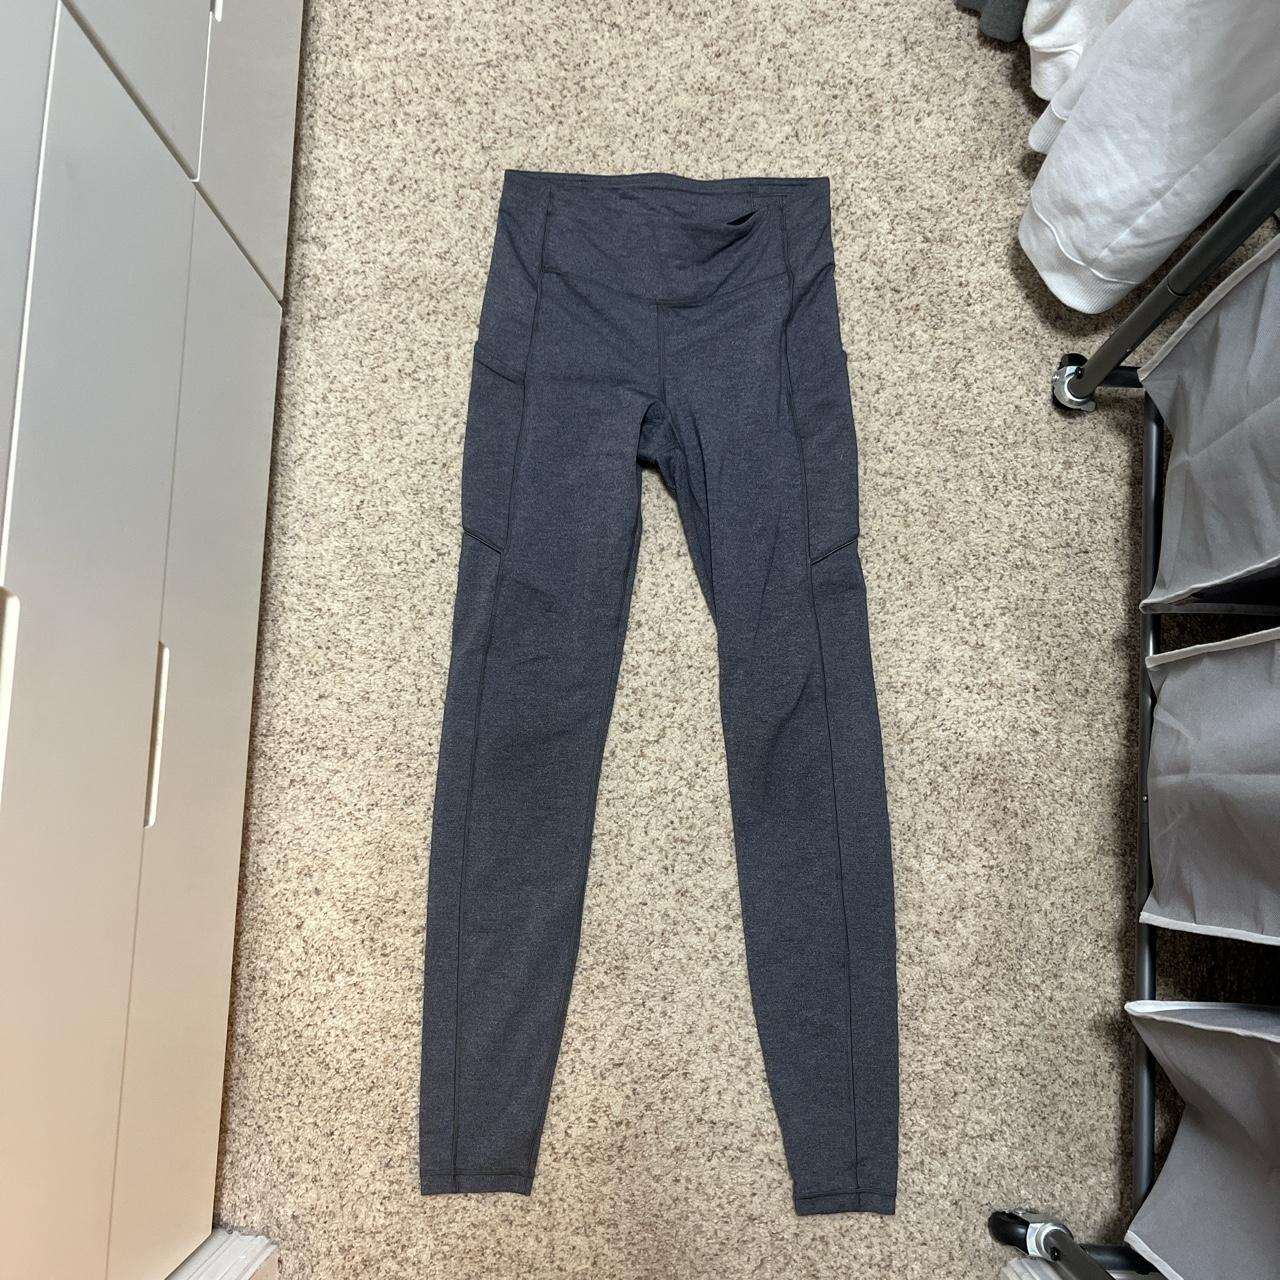 Grey Size 6, 28” Lululemon leggings. Has side